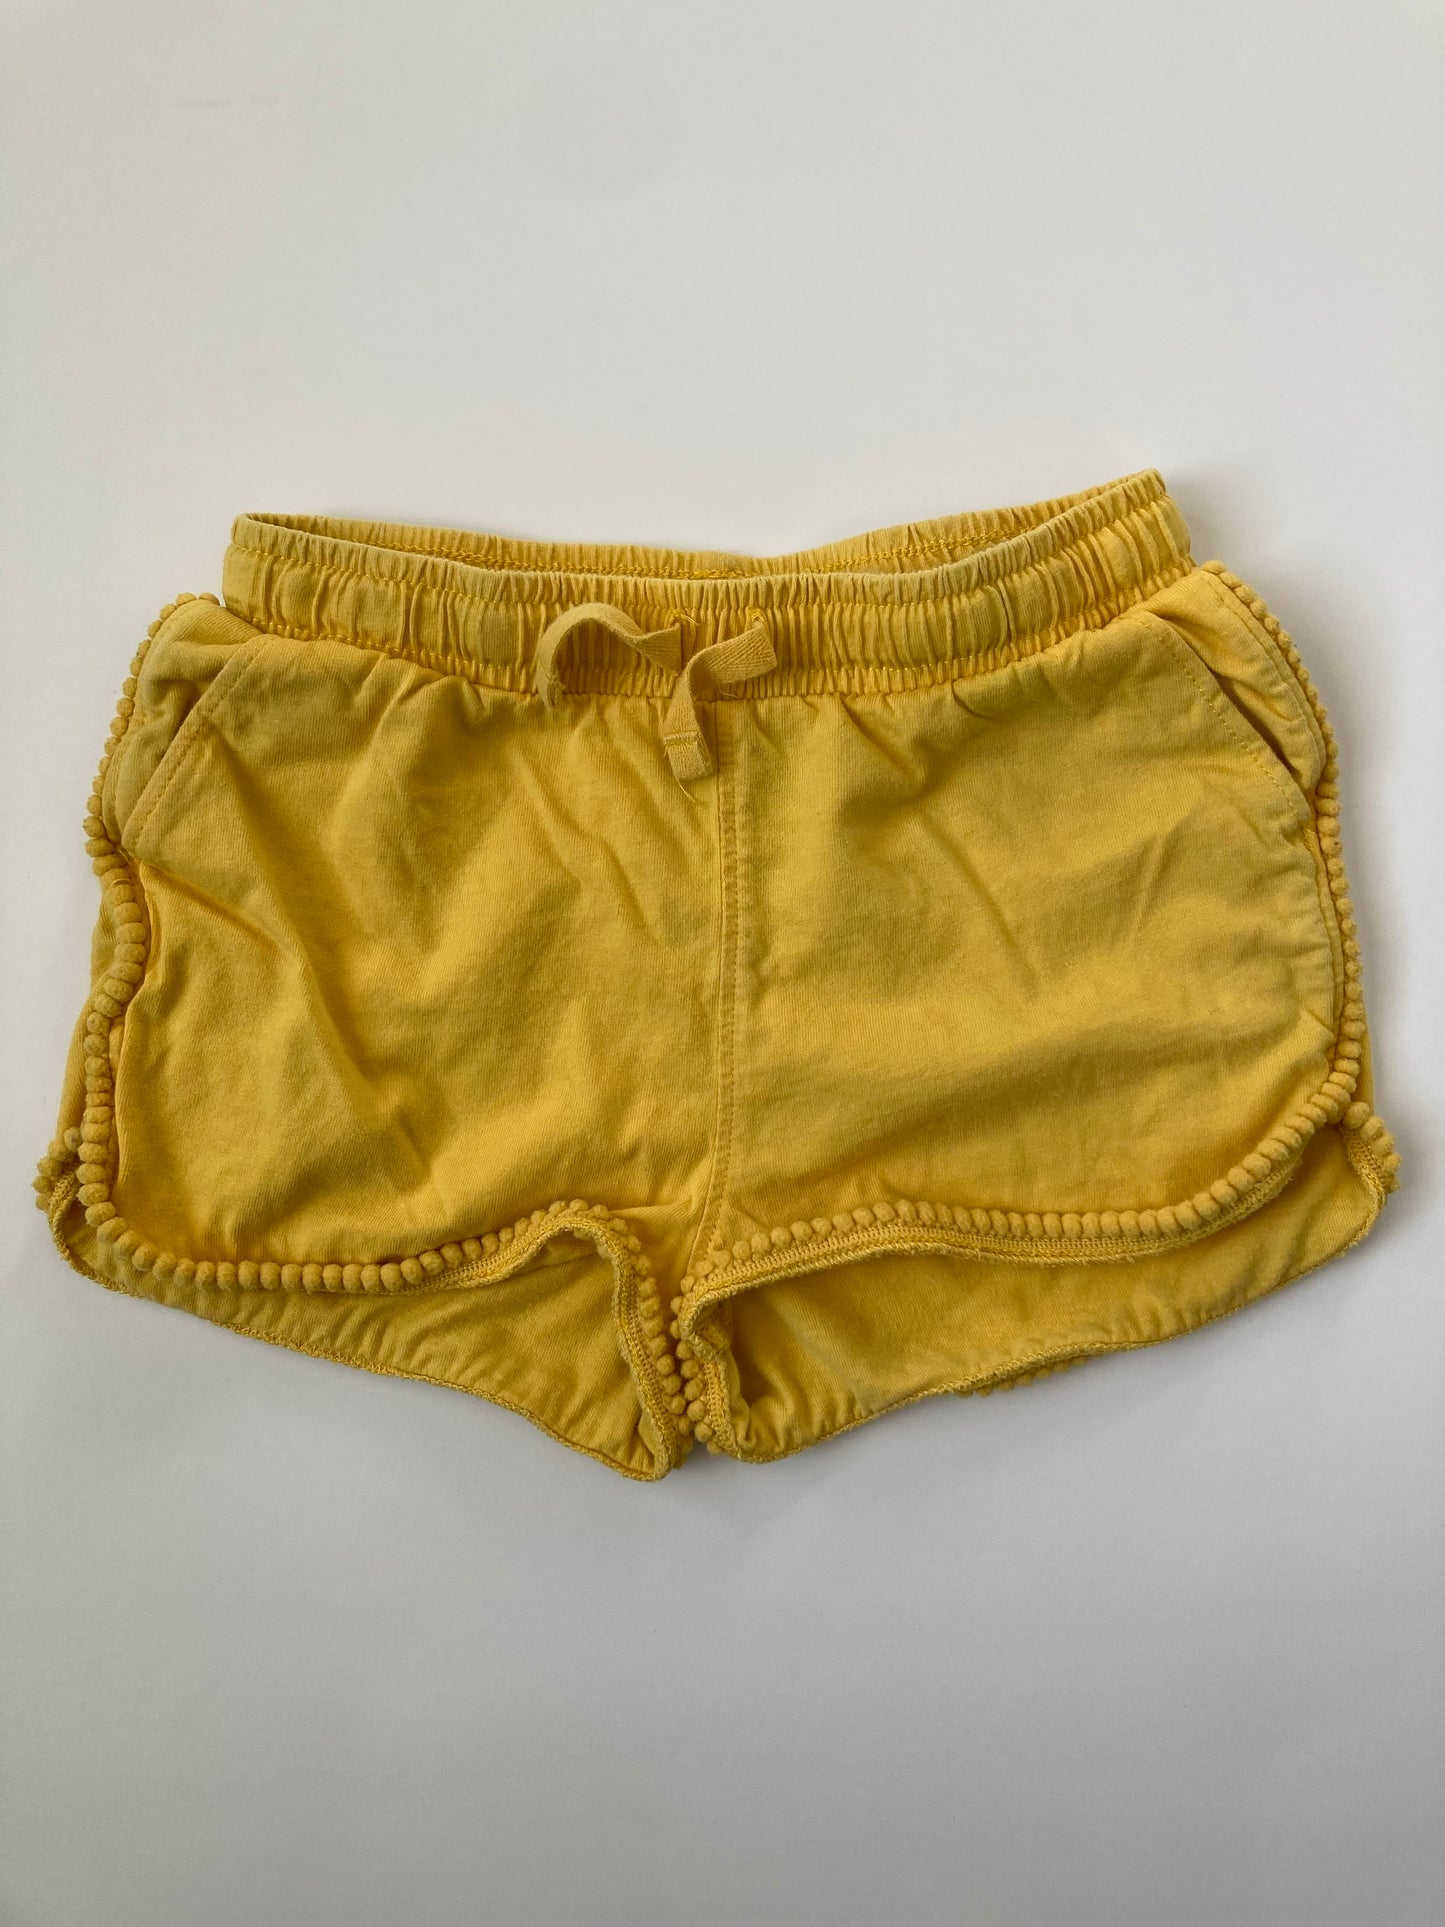 Tea Collection size 4 gold pom pom shorts